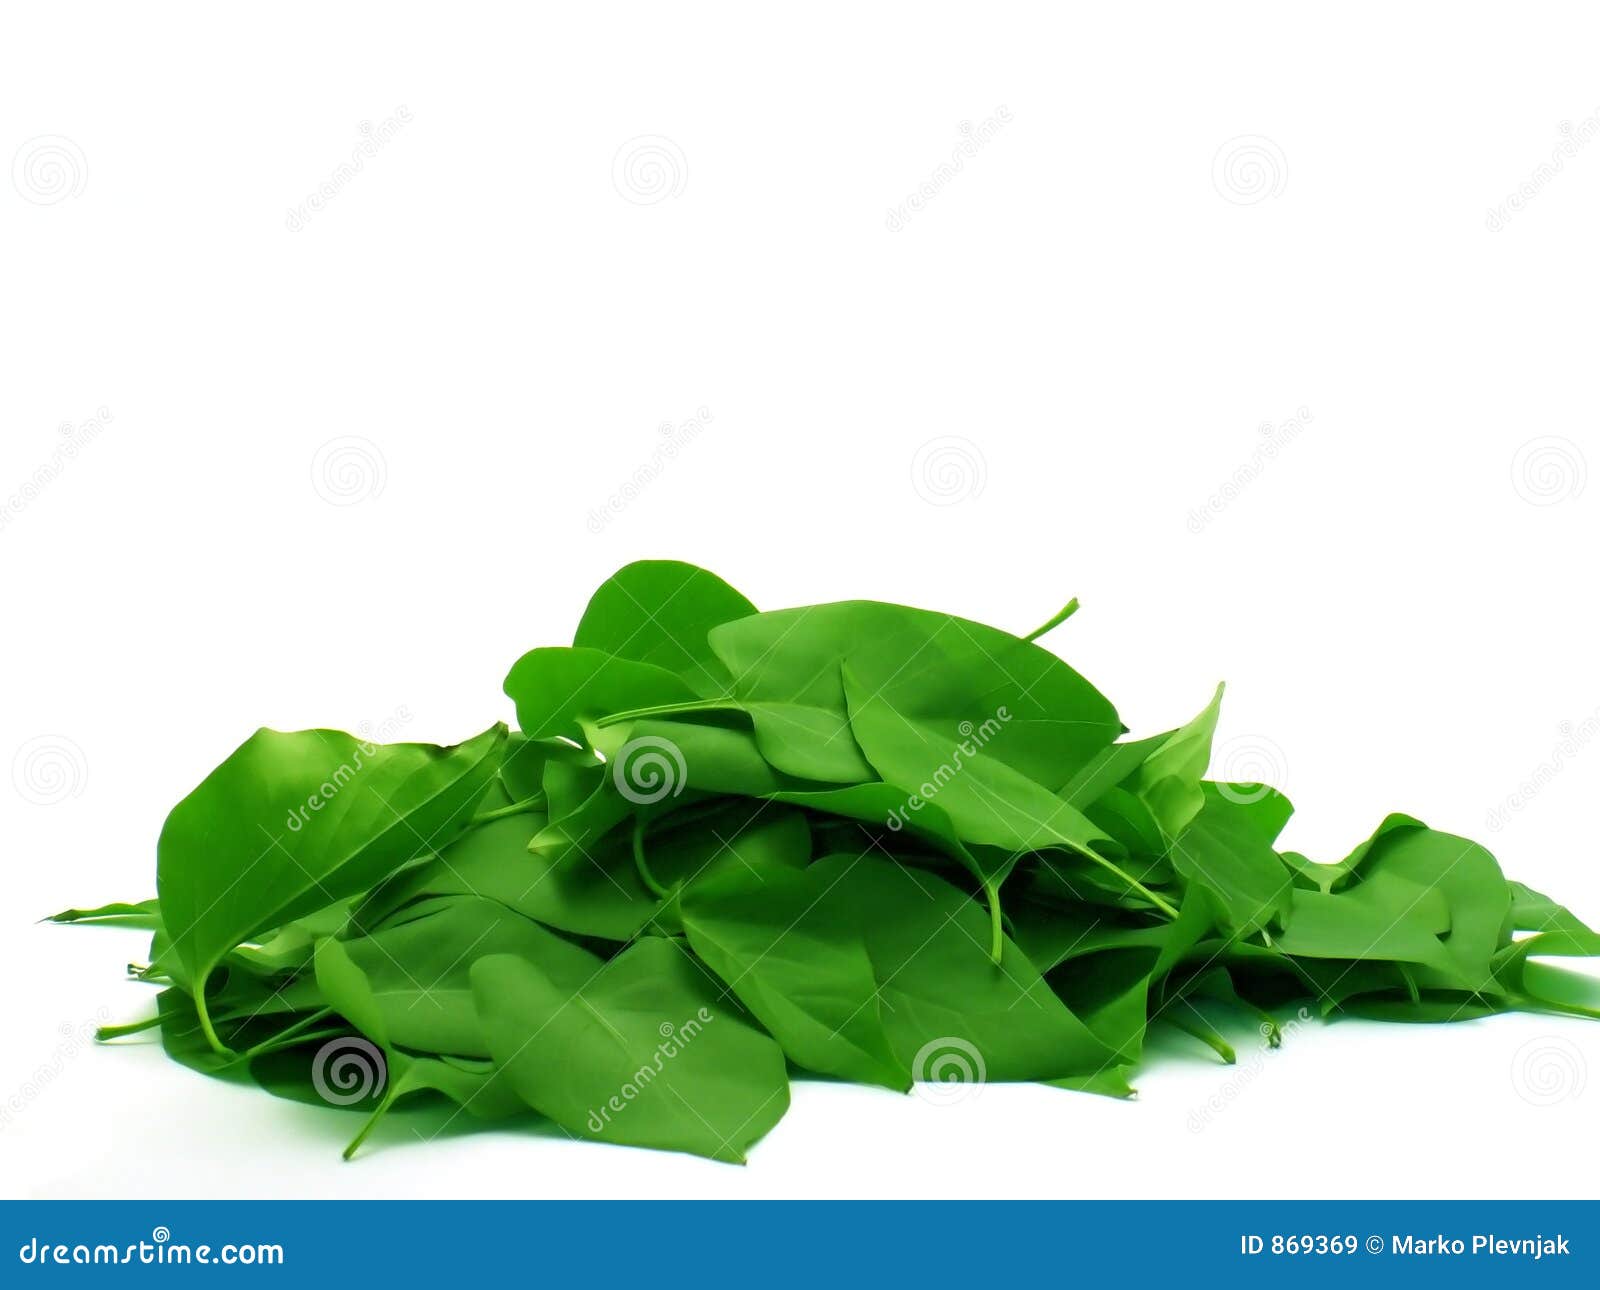 leaf pile clipart - photo #32